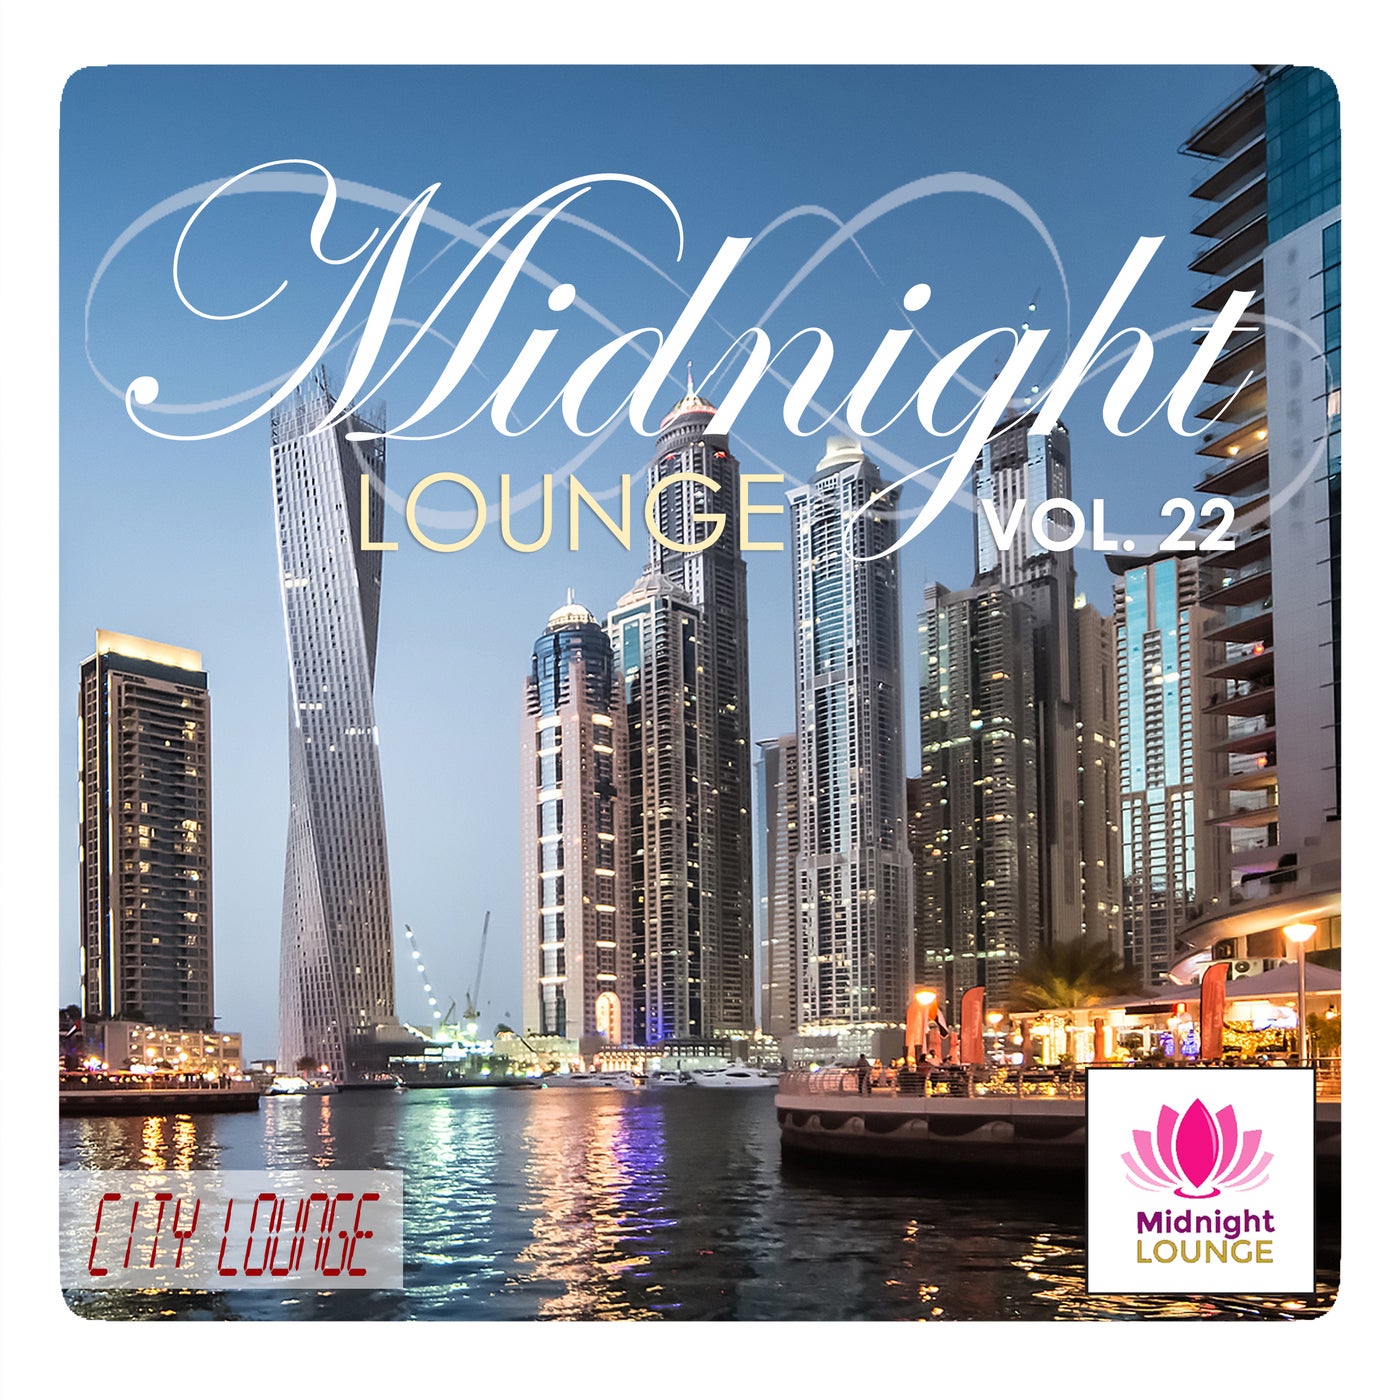 Midnight Lounge, Vol. 22: City Lounge